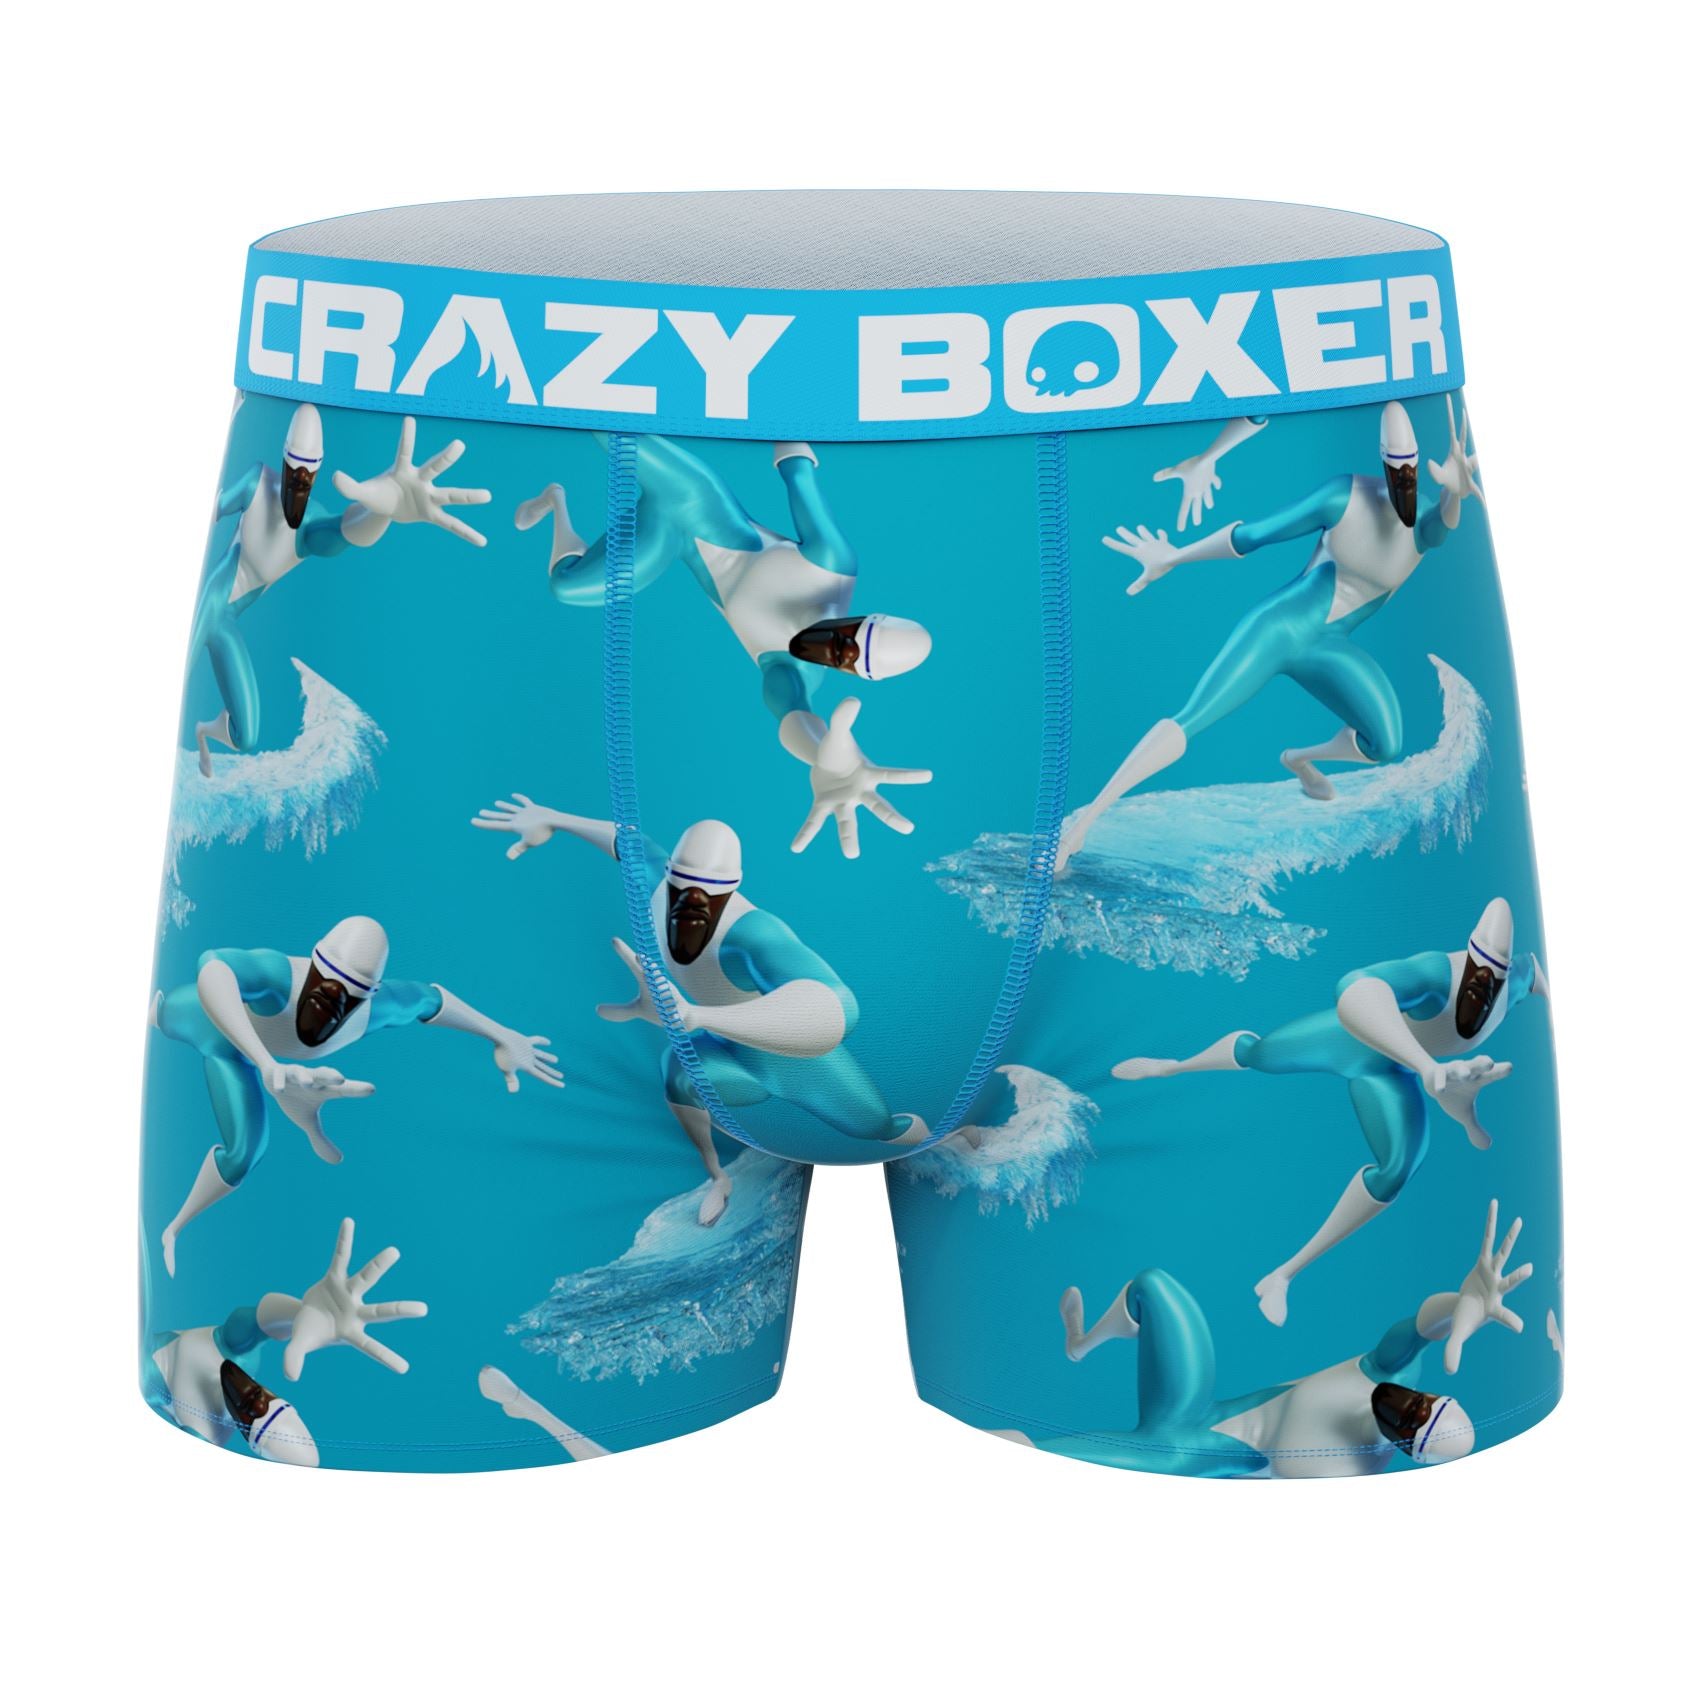 CRAZYBOXER The Incredibles Frozone Men's Boxer Briefs